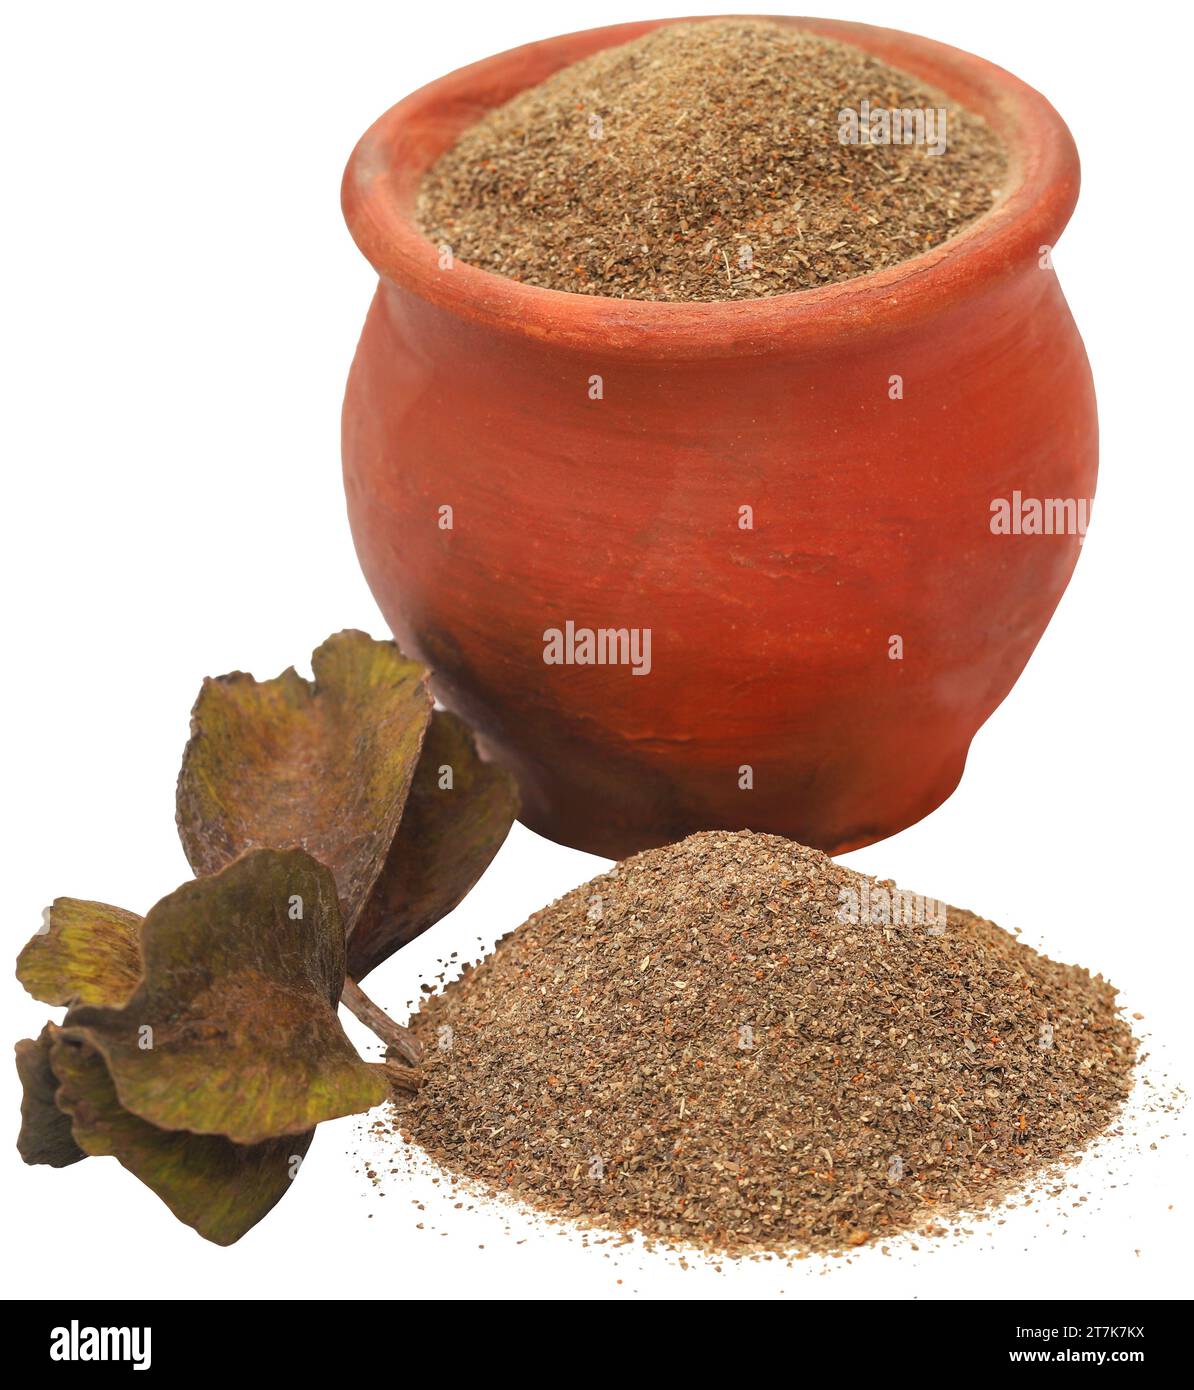 Ayurvedic arjun fruit with ground powder in pottery Stock Photo